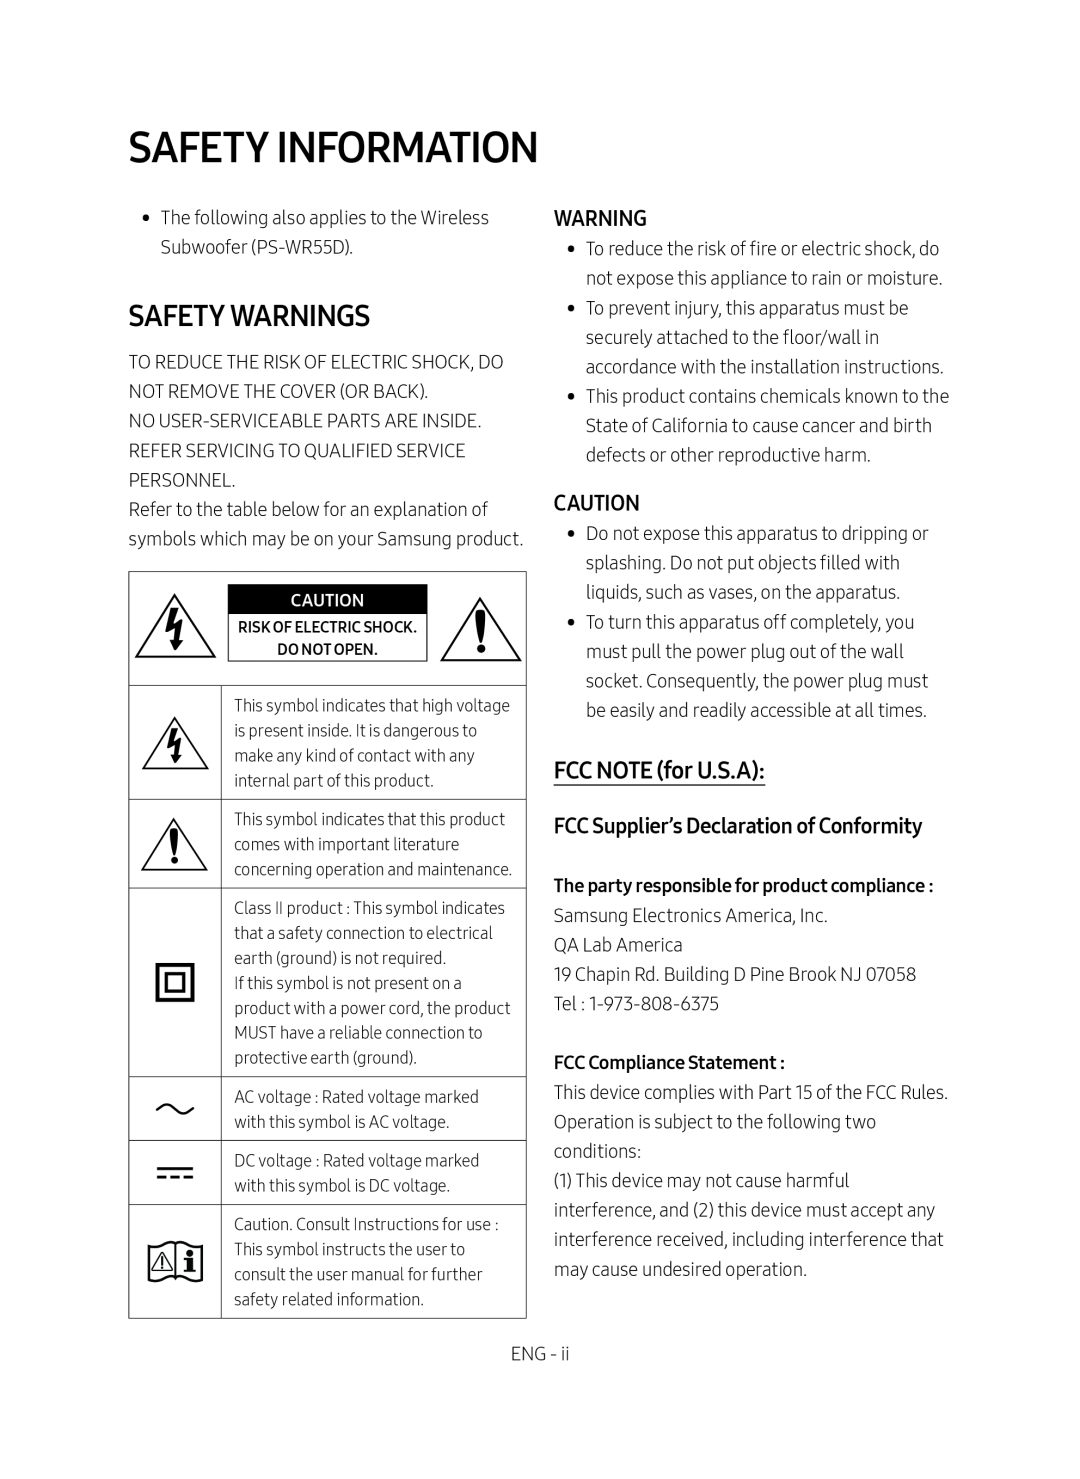 SAFETY WARNINGS Standard HW-R550